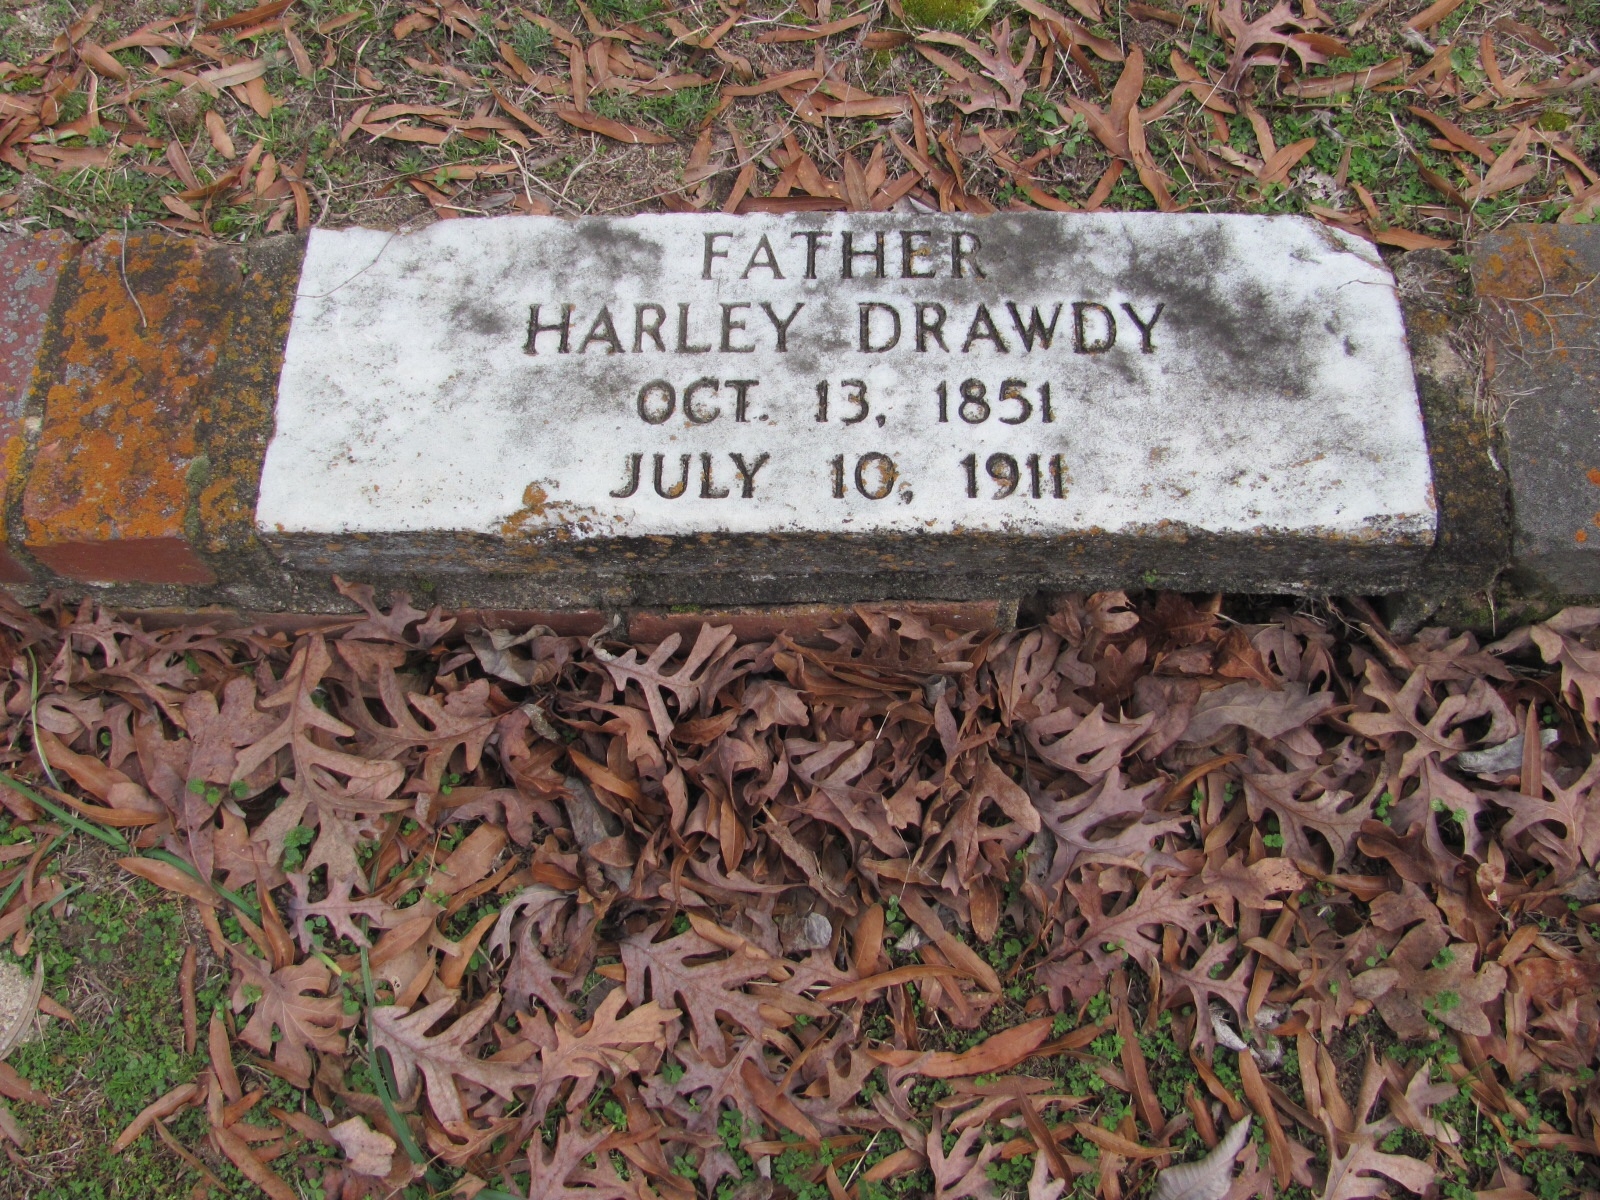 Harley Drawdy gravesite